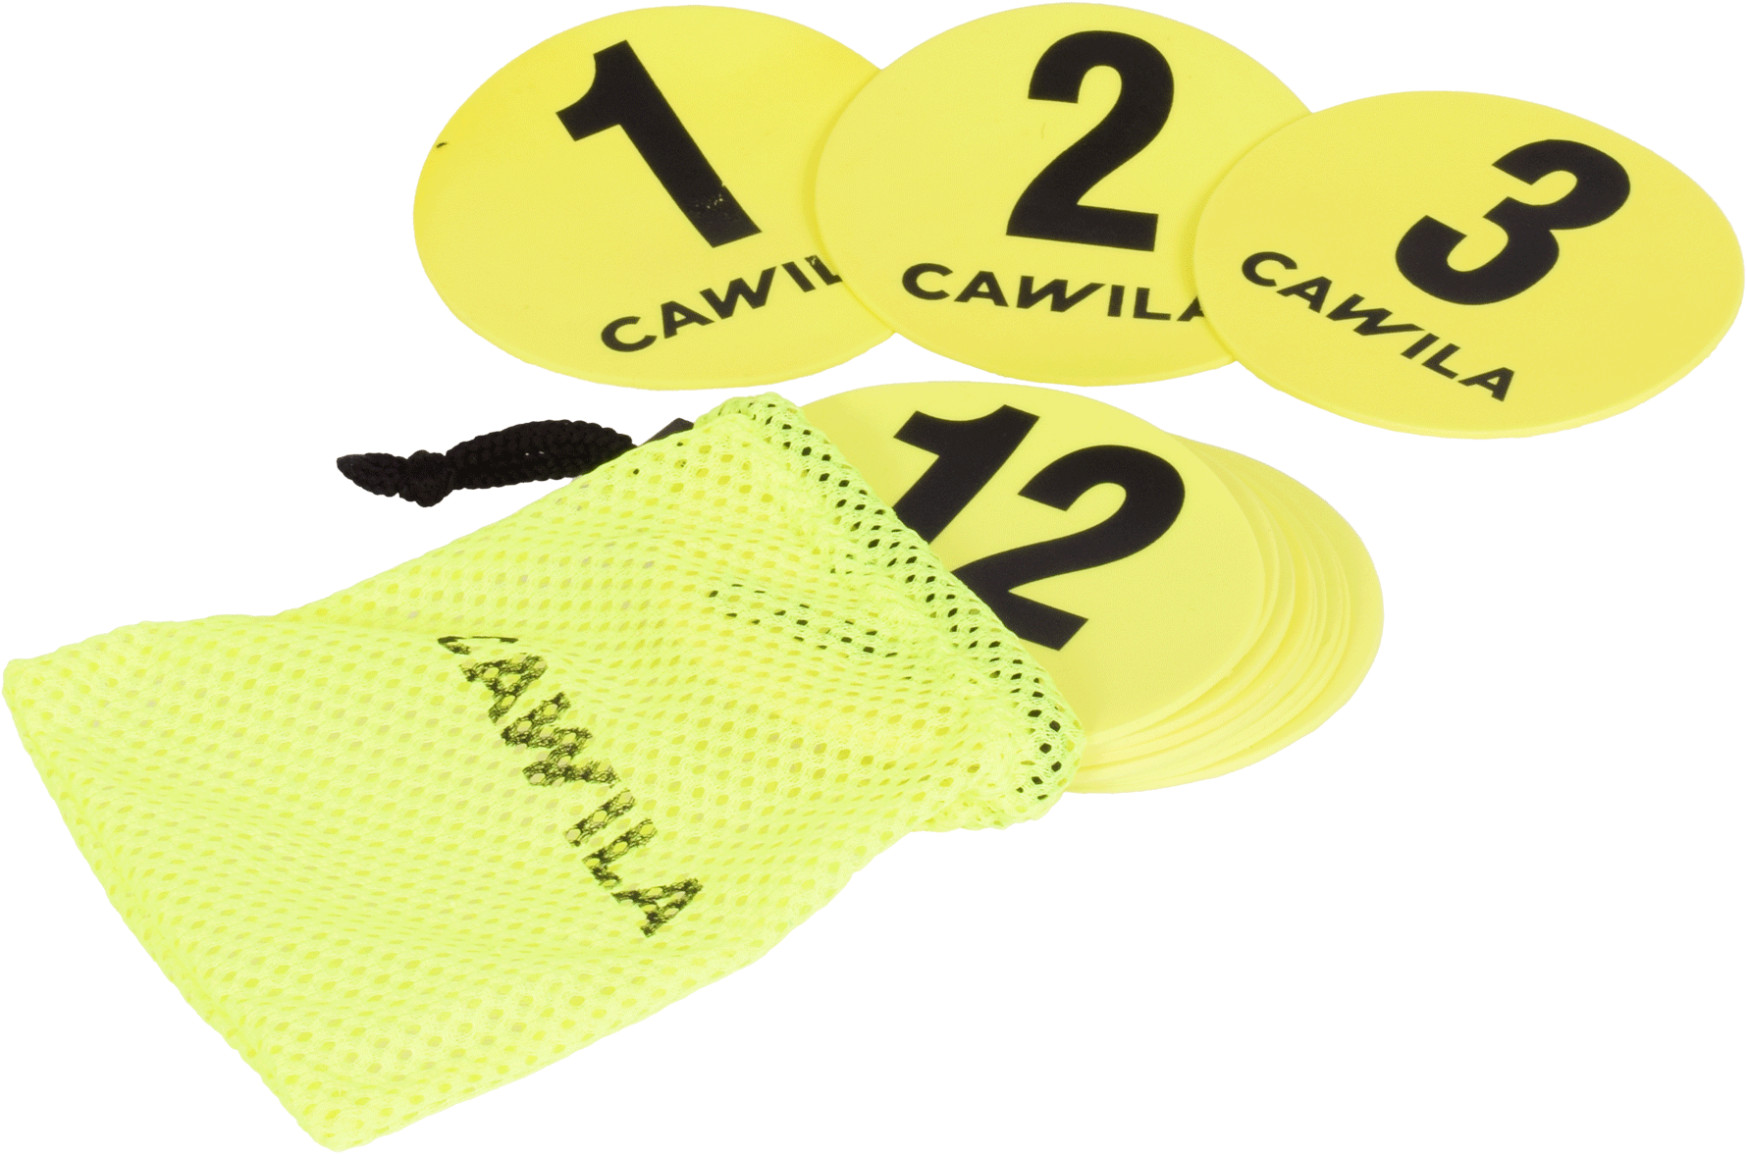 Discuri de marcare Cawila Floormarker Nr.1-12 Set d=12,5 cm